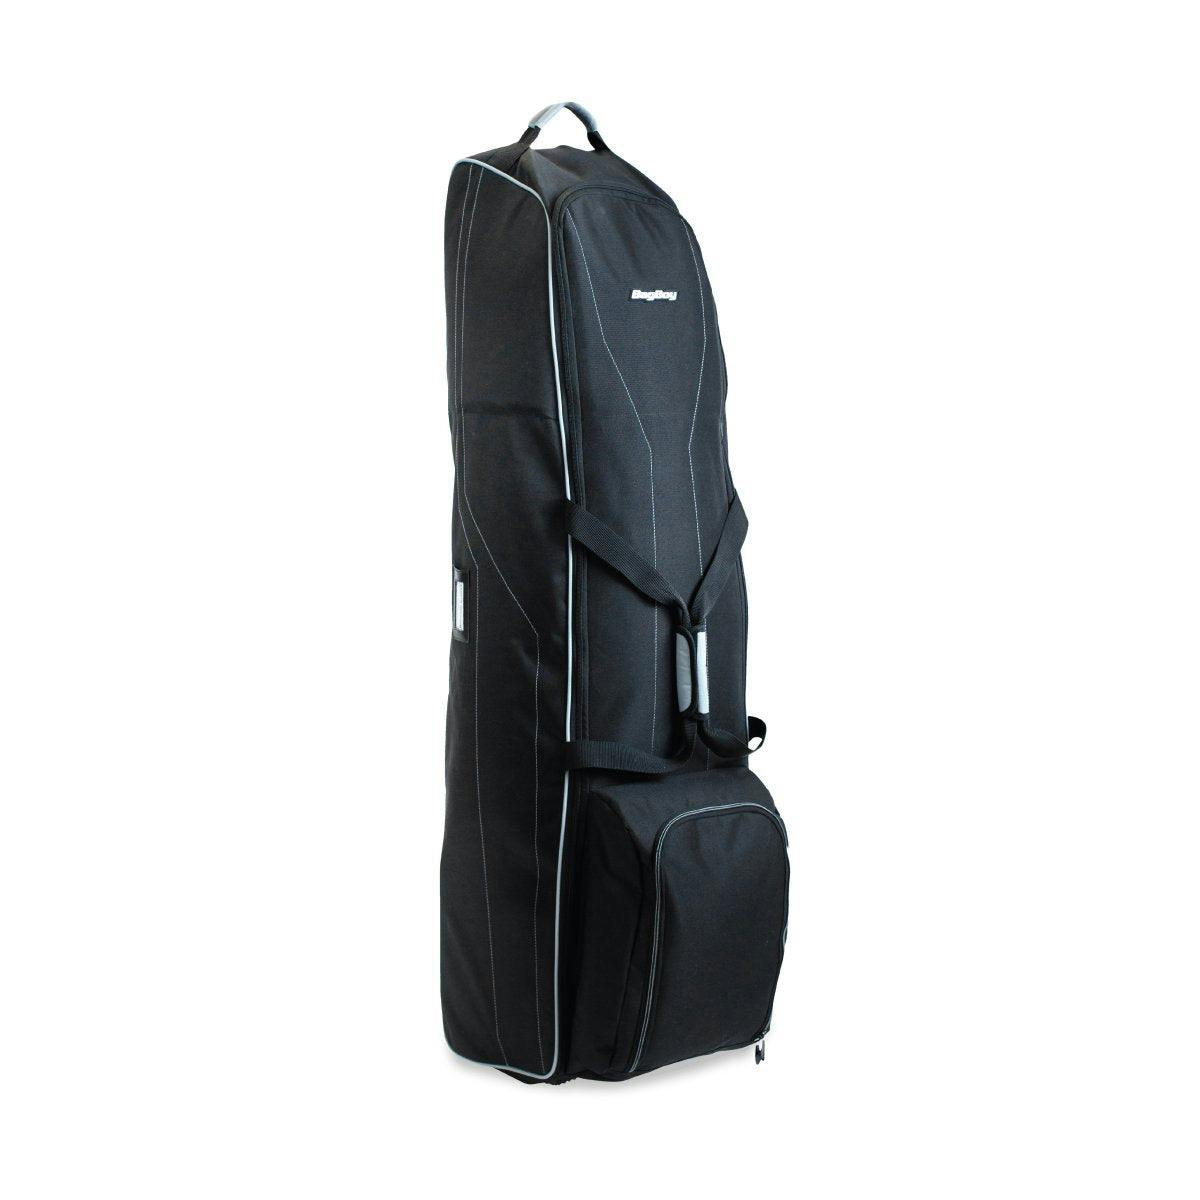 Bag Boy T-460 Travel Cover · Black/Charcoal